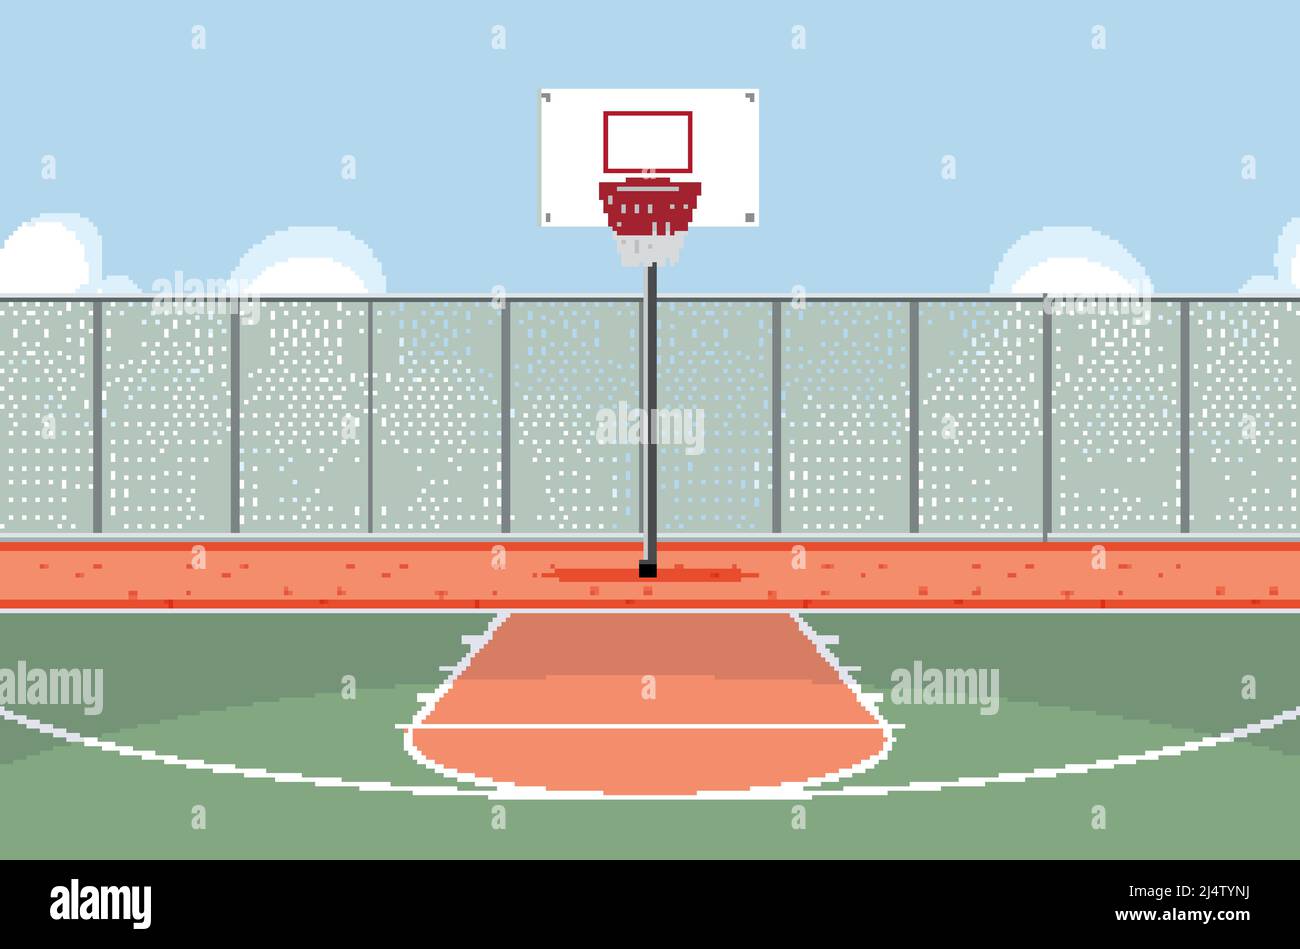 Empty basketball court scene illustration Stock Vector